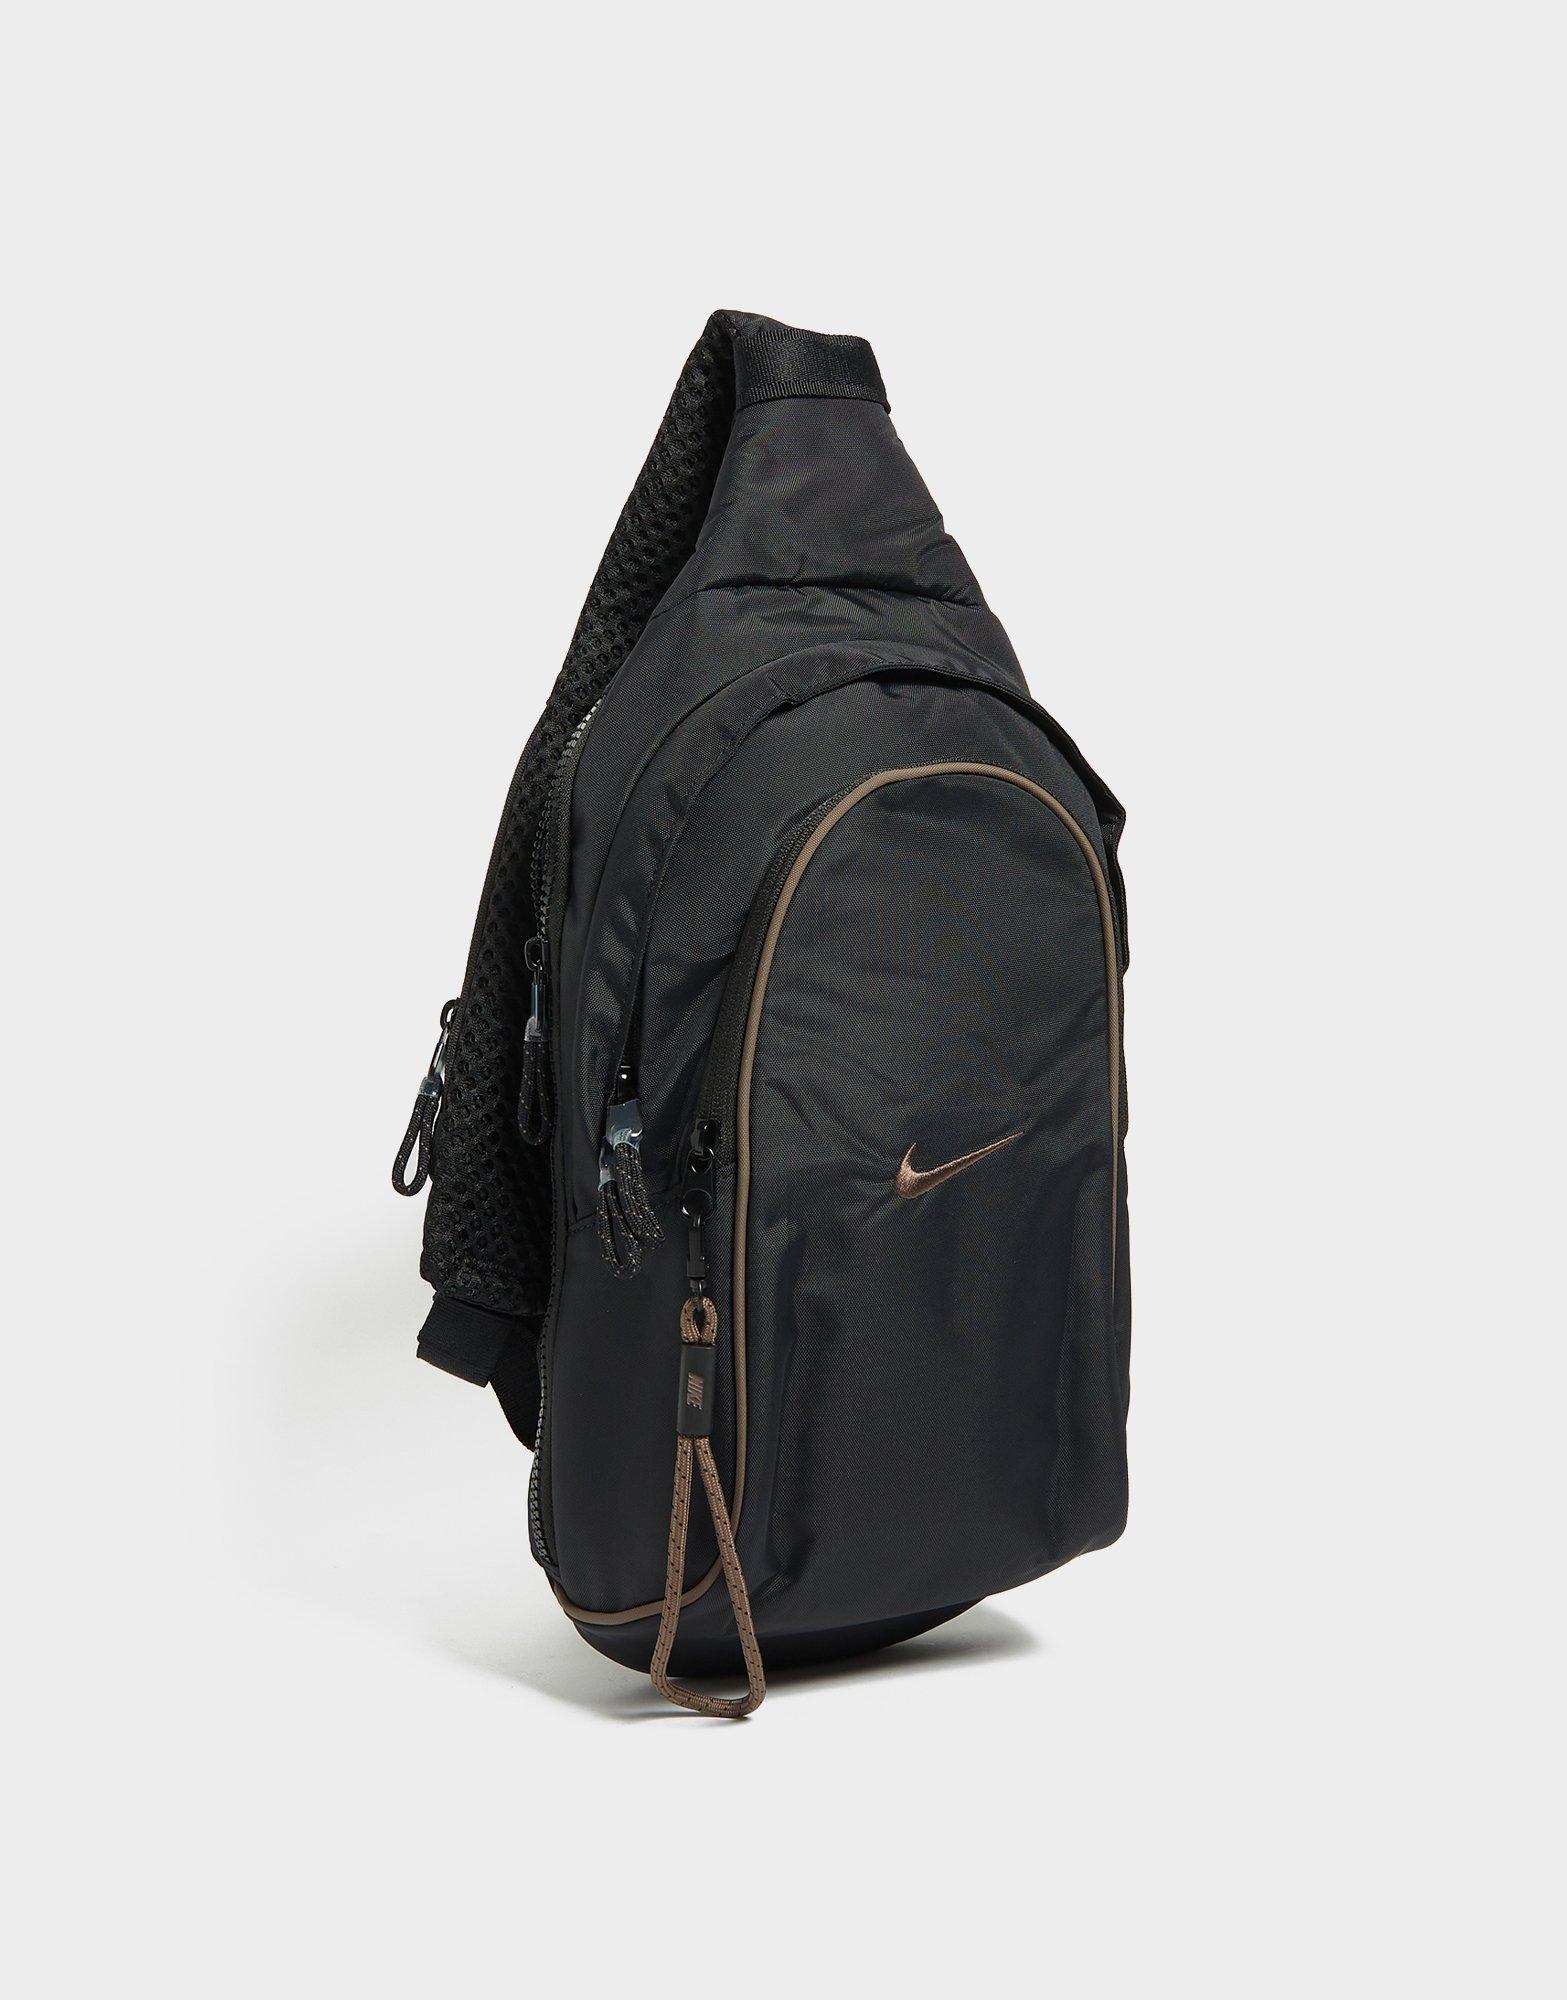 12 Promotional Sling Backpacks New Balance Athletics LG Sling Bag